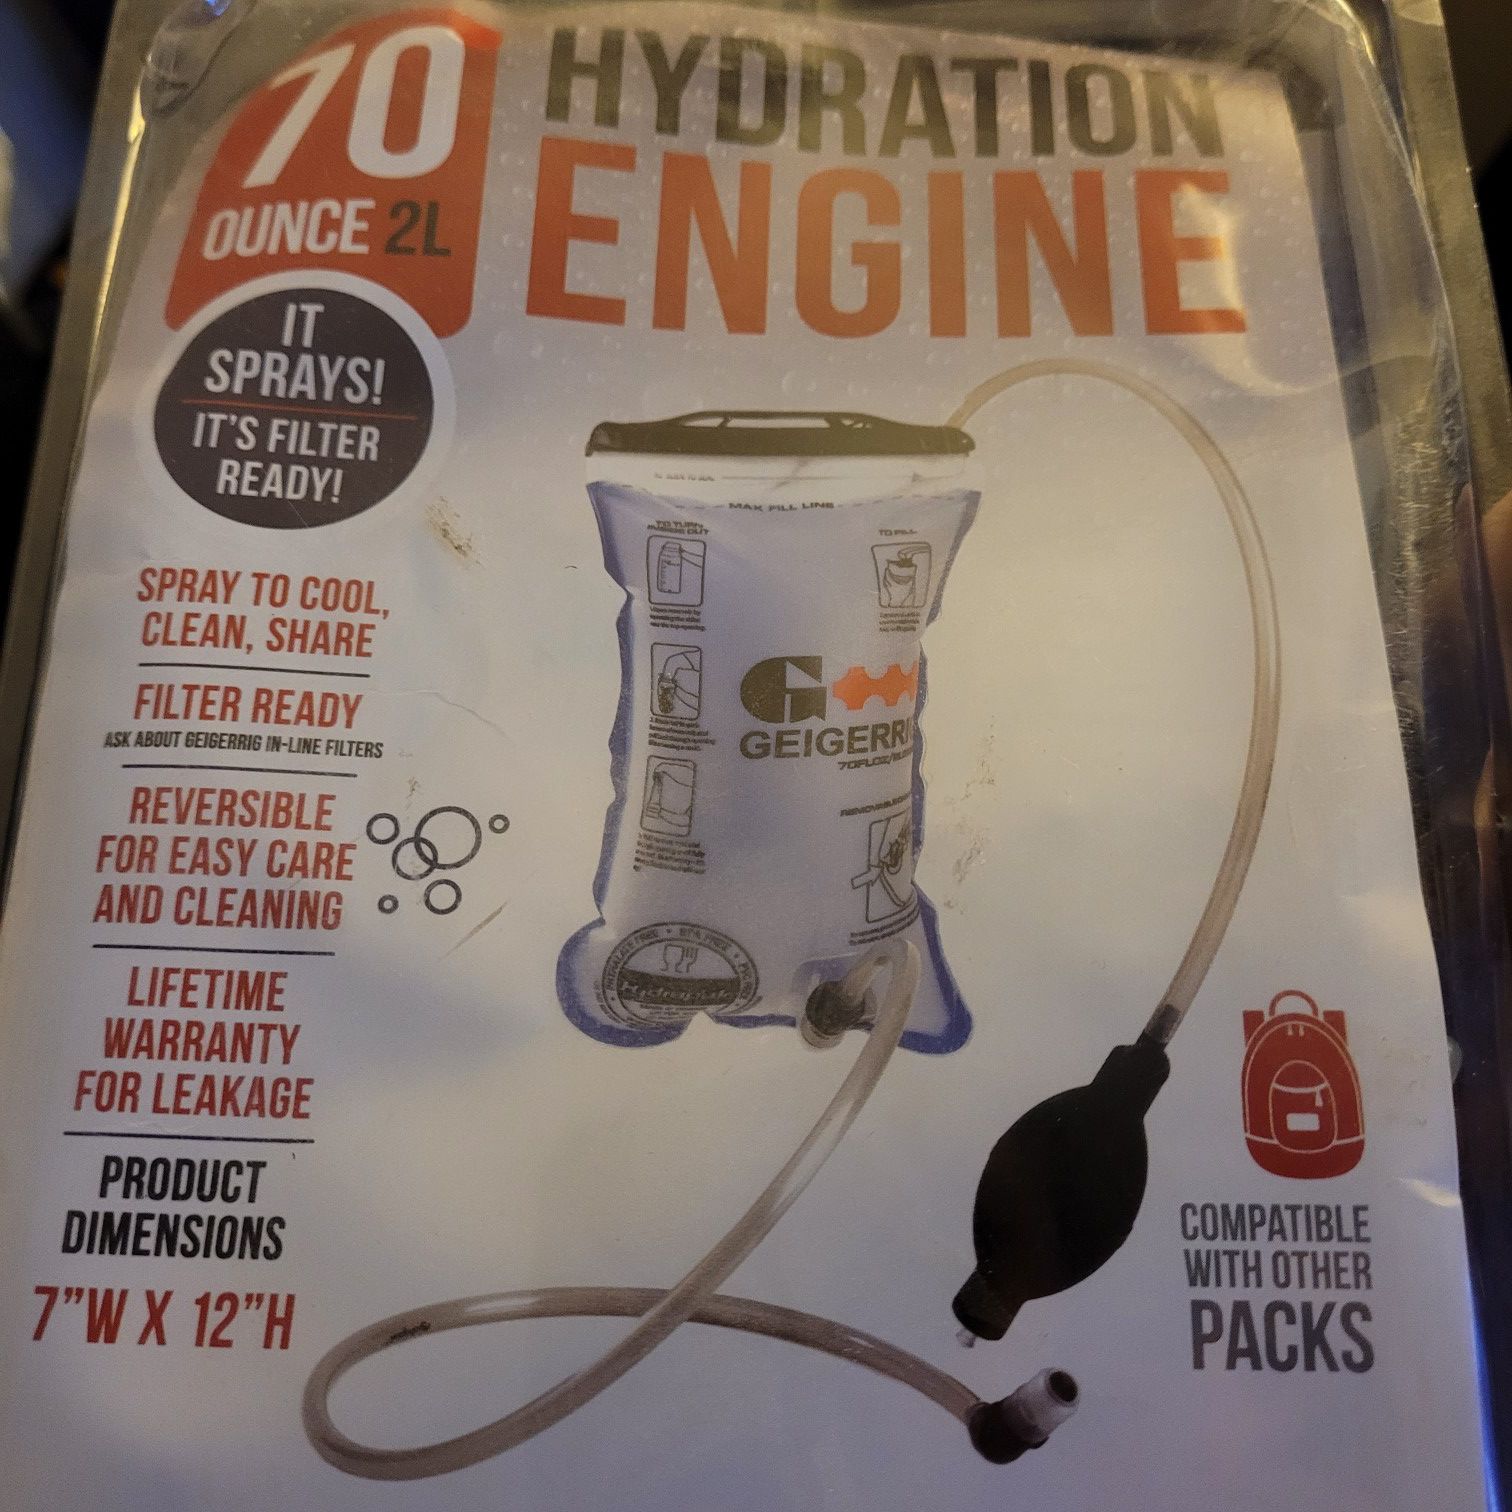 Hydration Pack 2 Liter for many backpacks